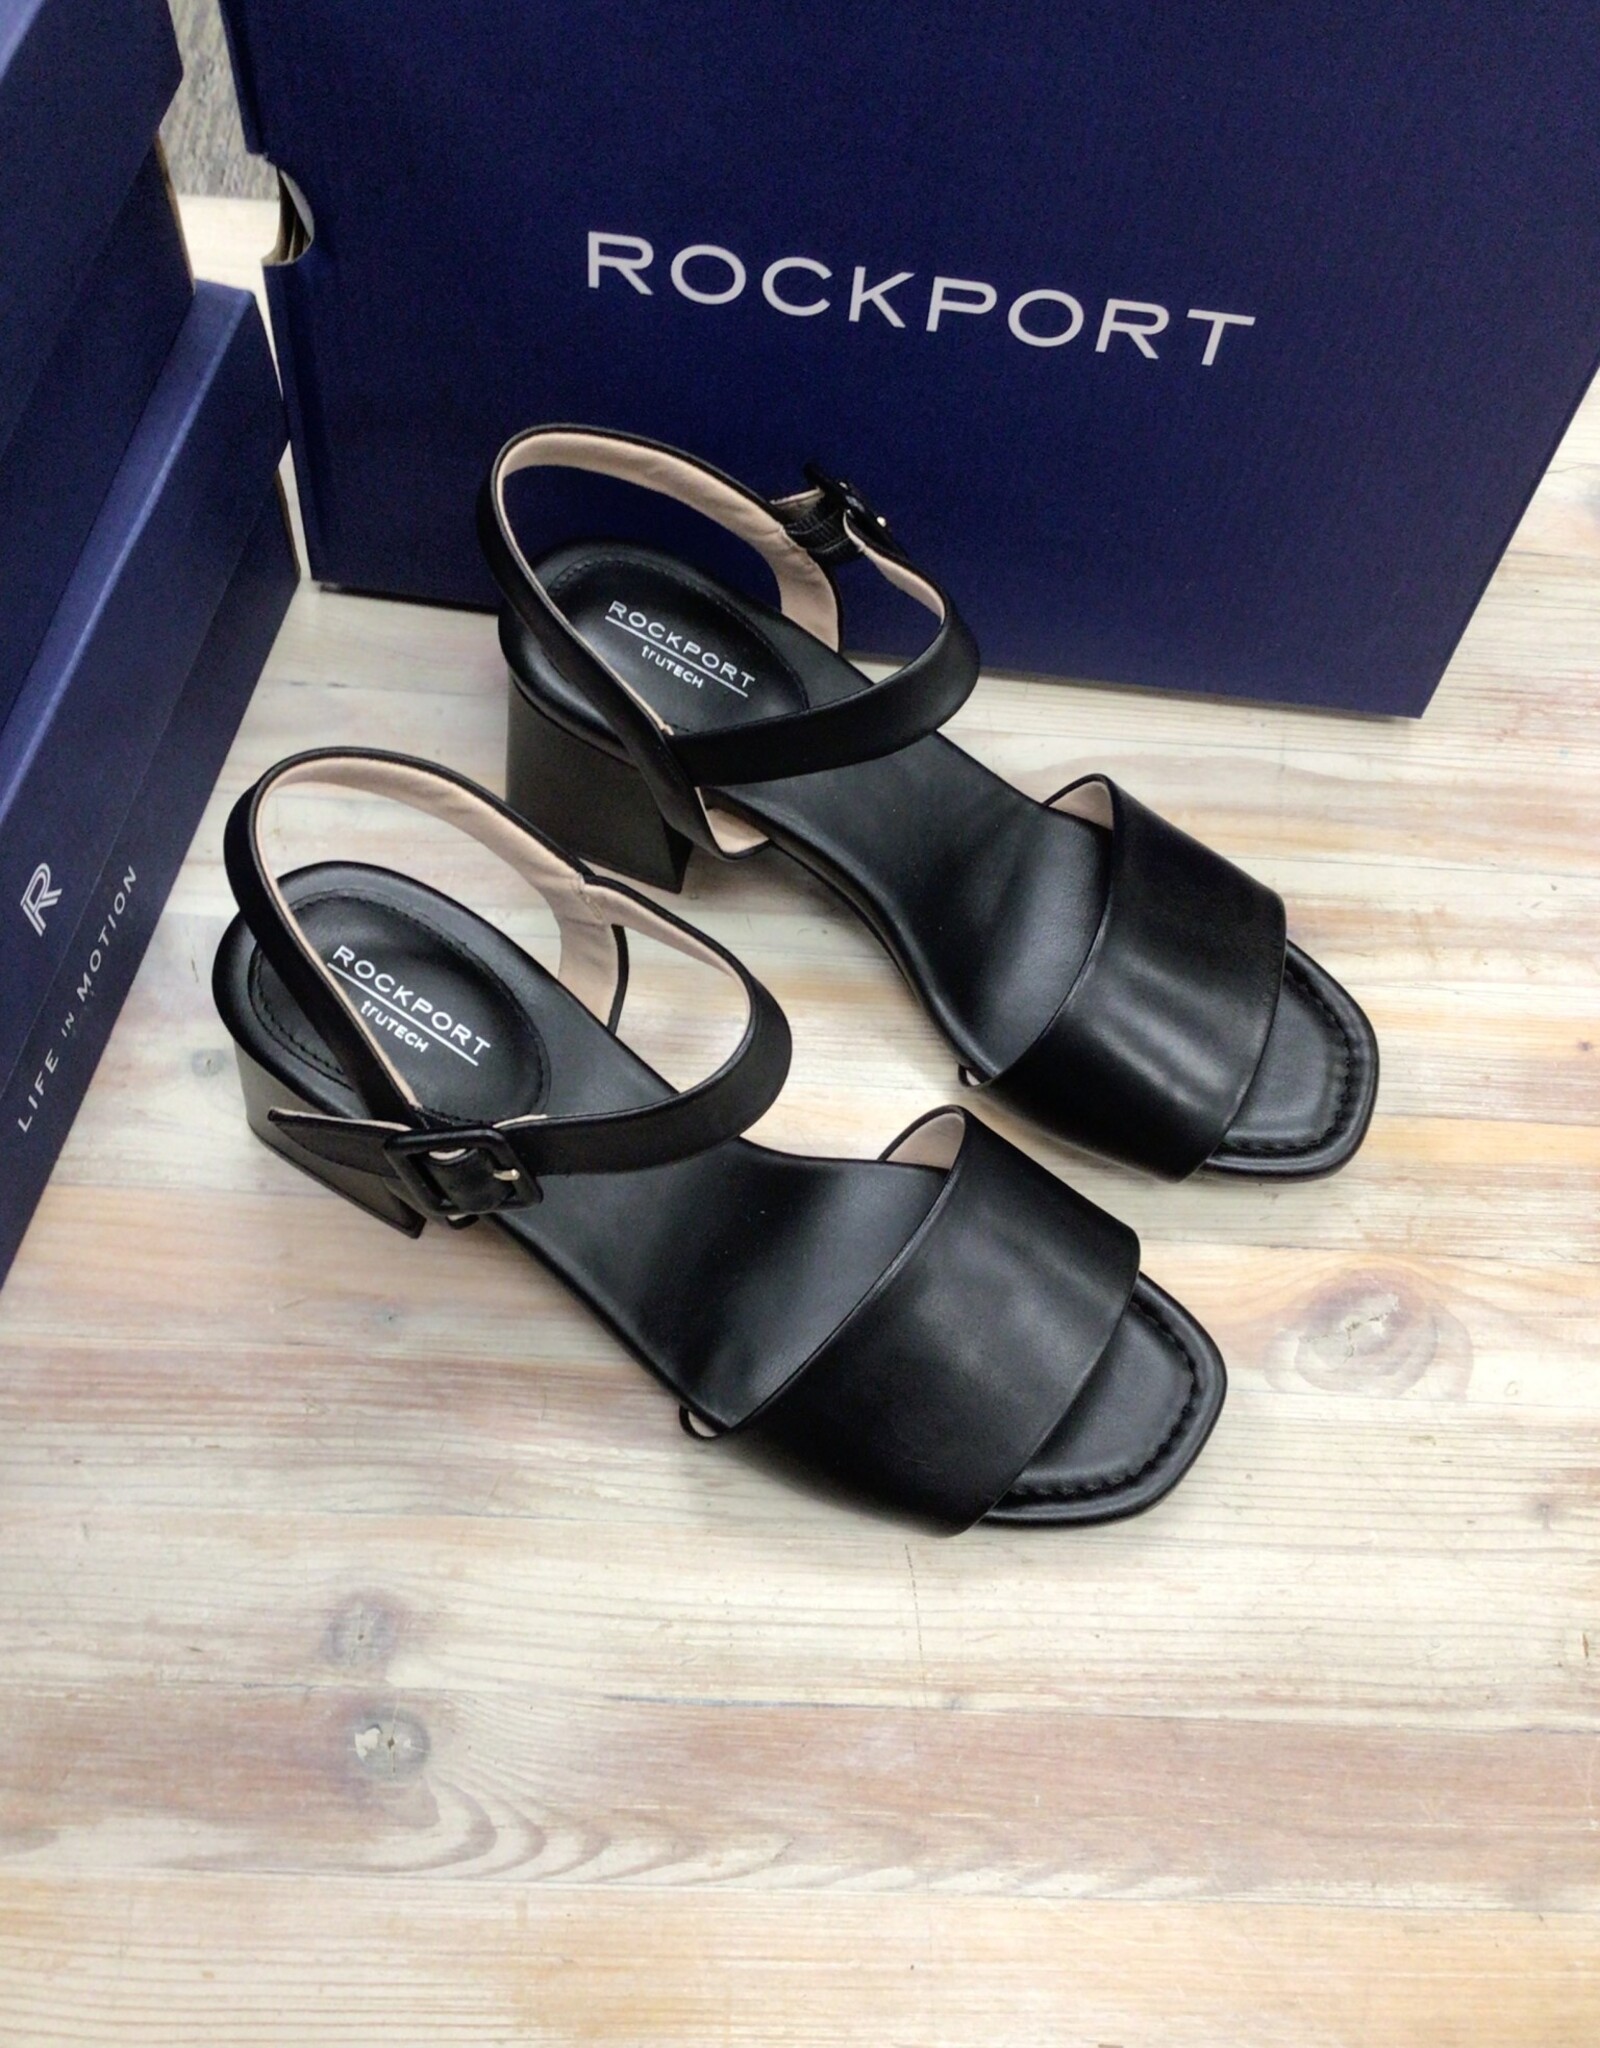 Rockport Rockport CJ1089 Farrah 2 Piece Ladies’